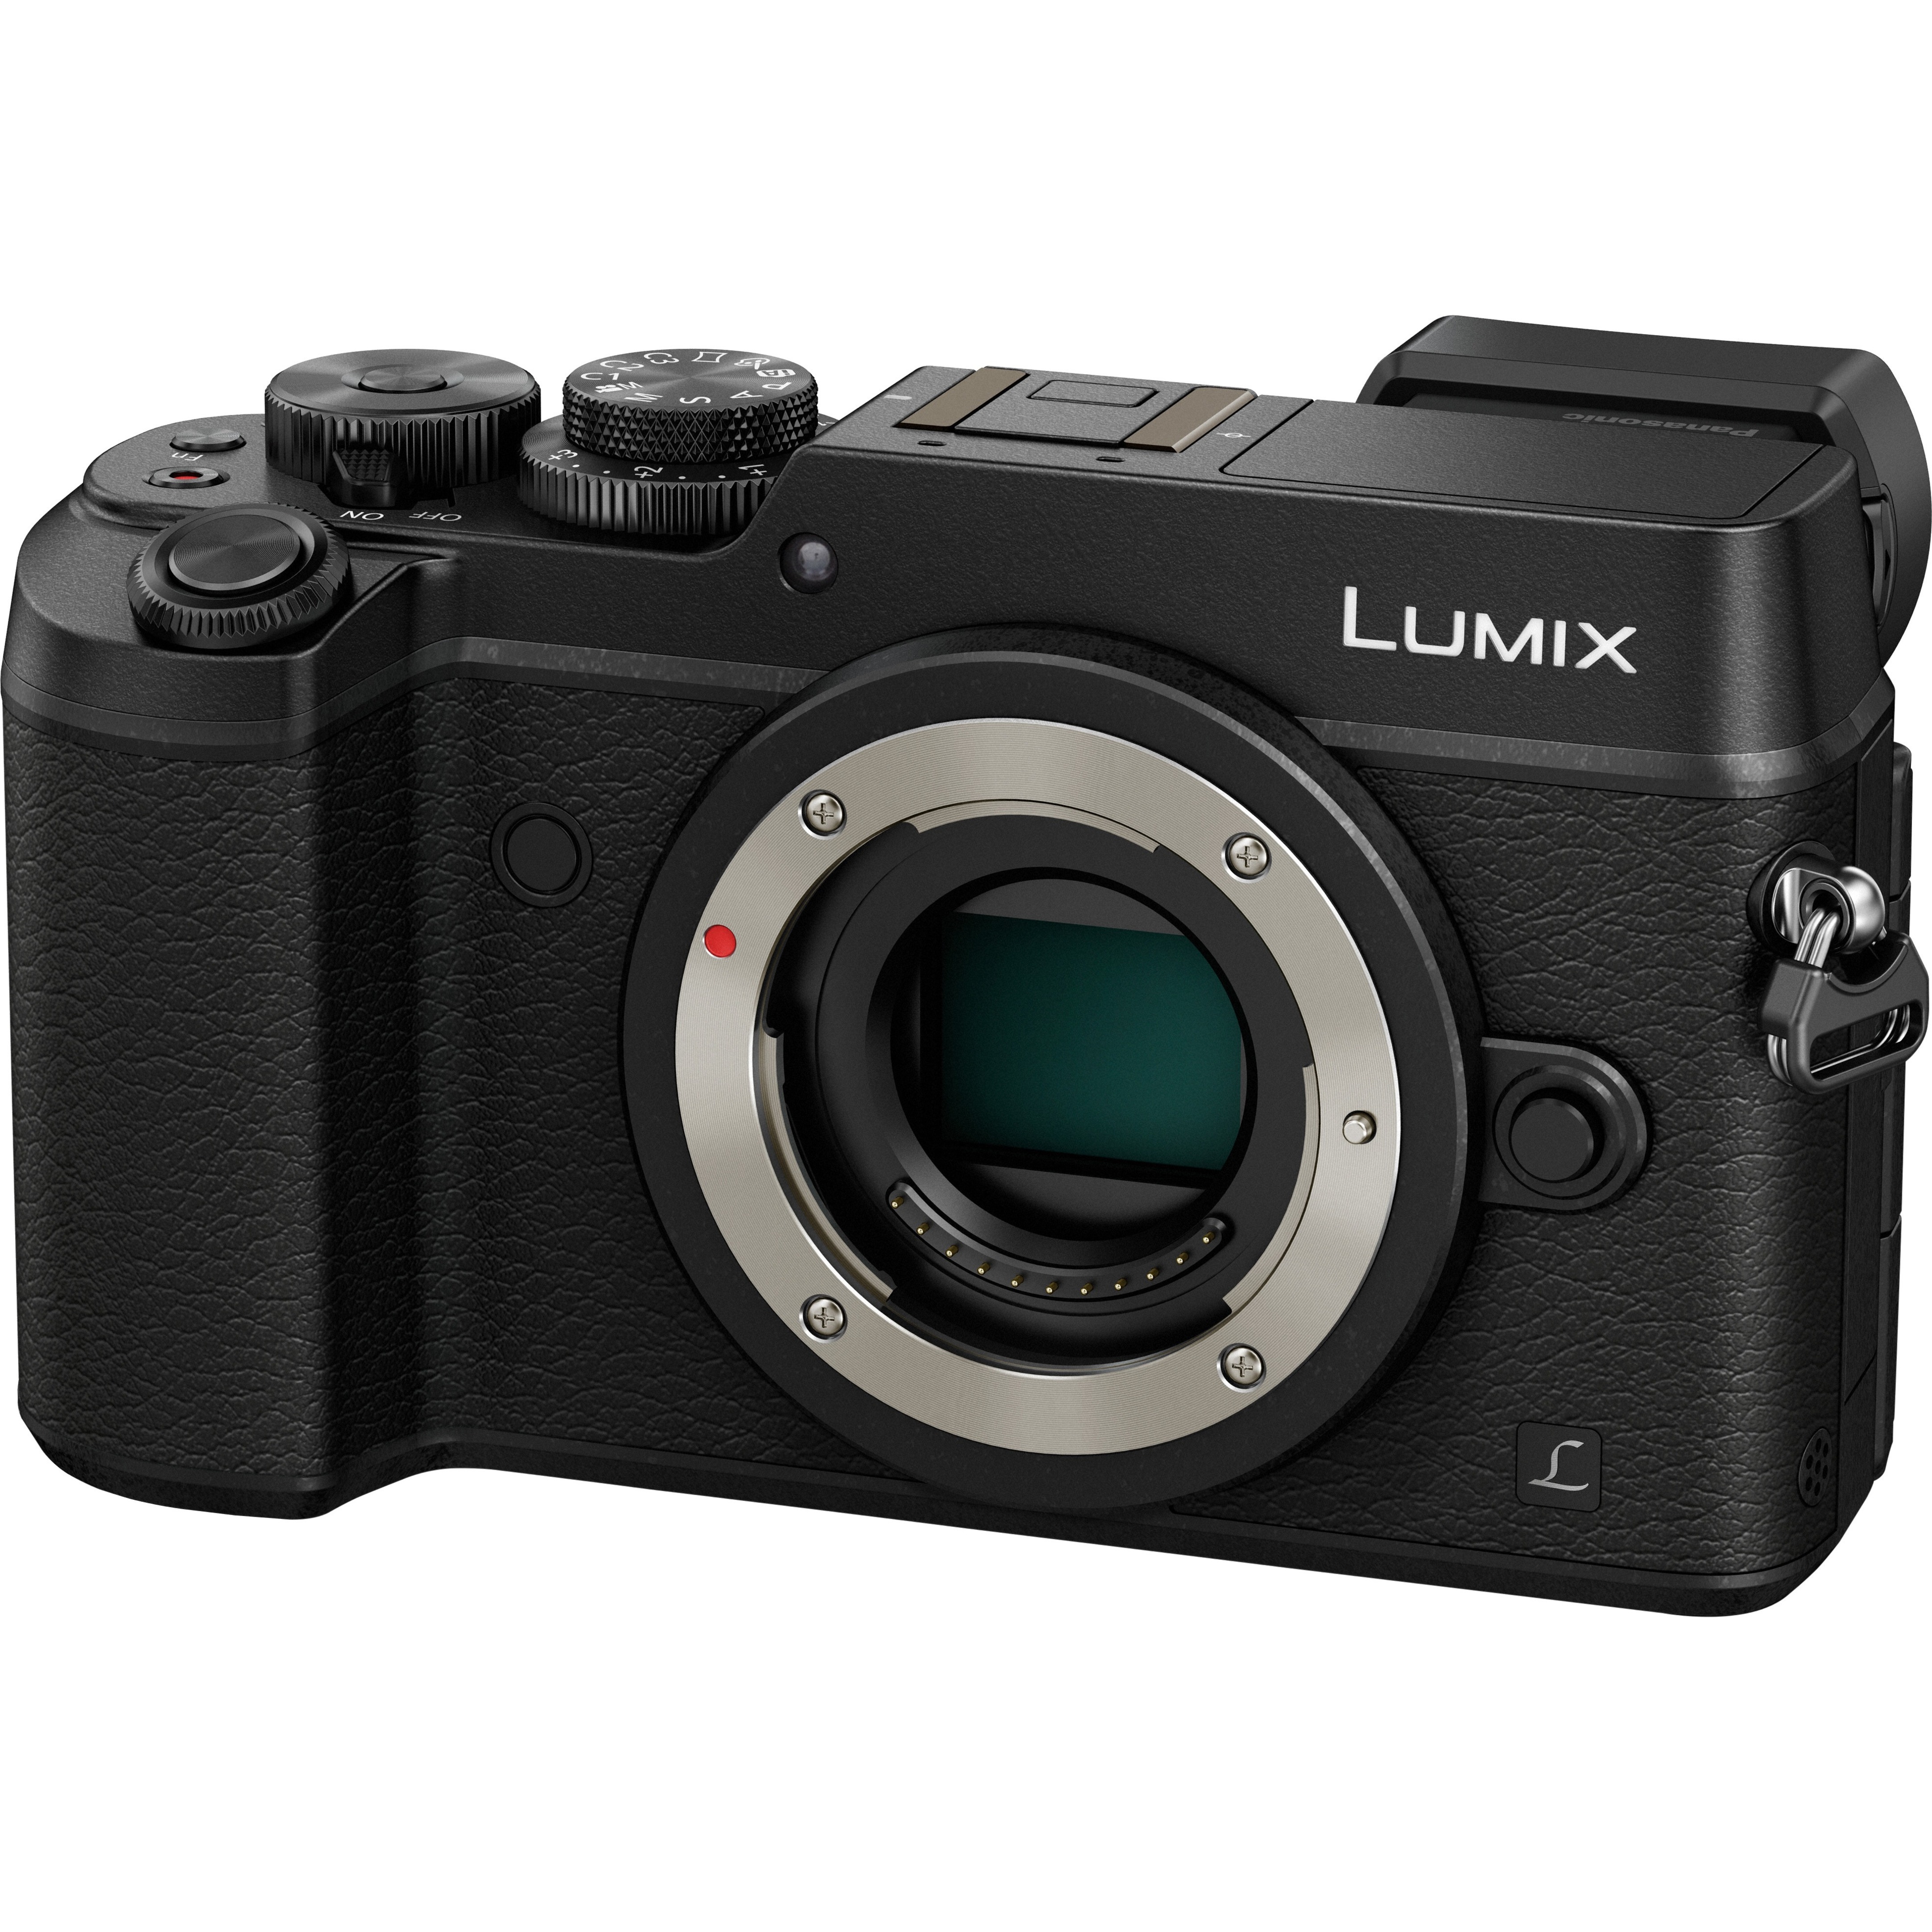 Panasonic Lumix GX8 20.3 Megapixel Mirrorless Camera Body Only, Black - image 1 of 4